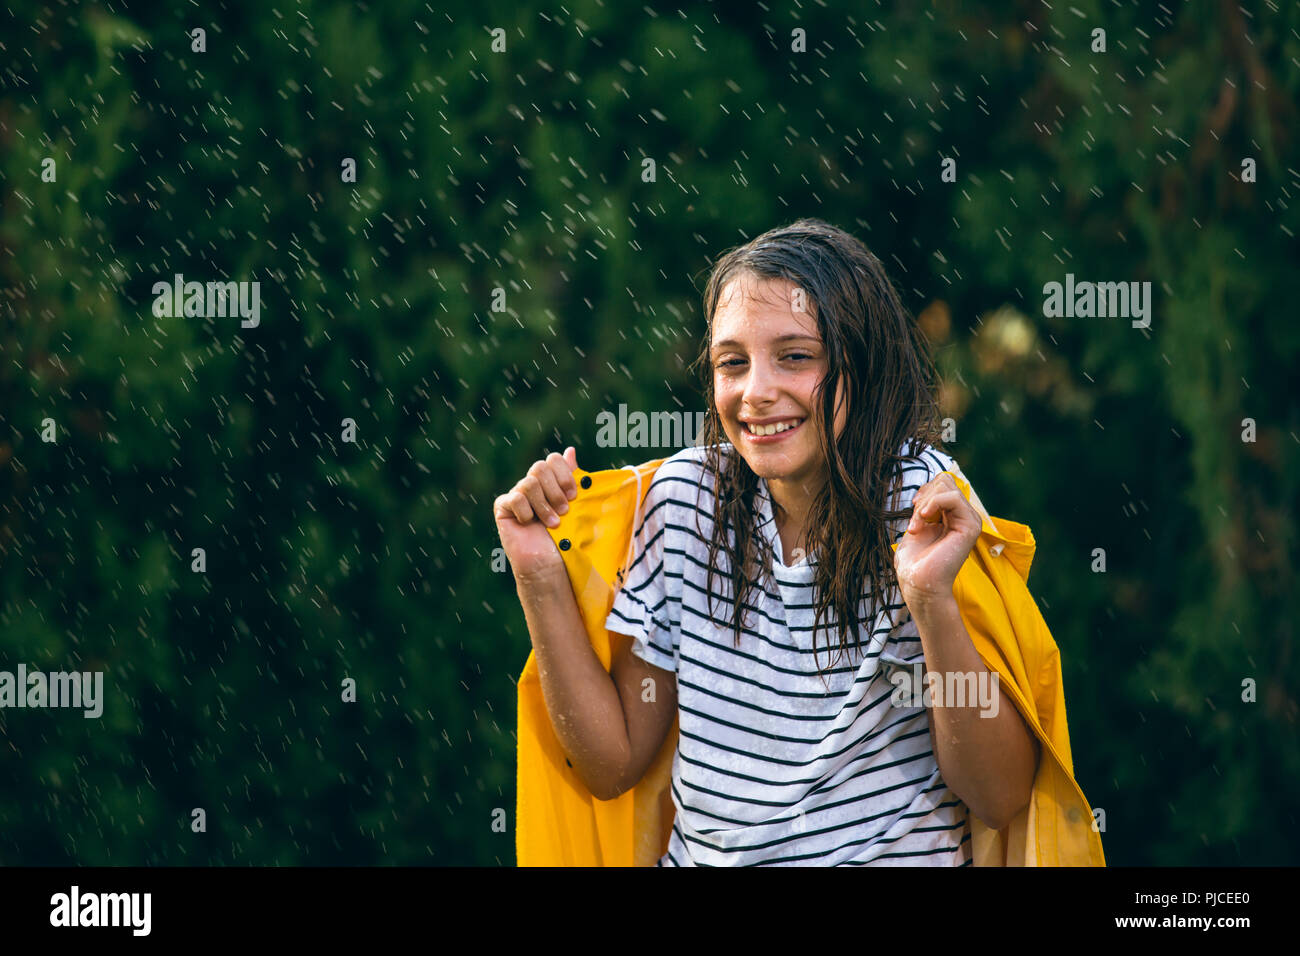 girl with yellow raincoat in rain Stock Photo